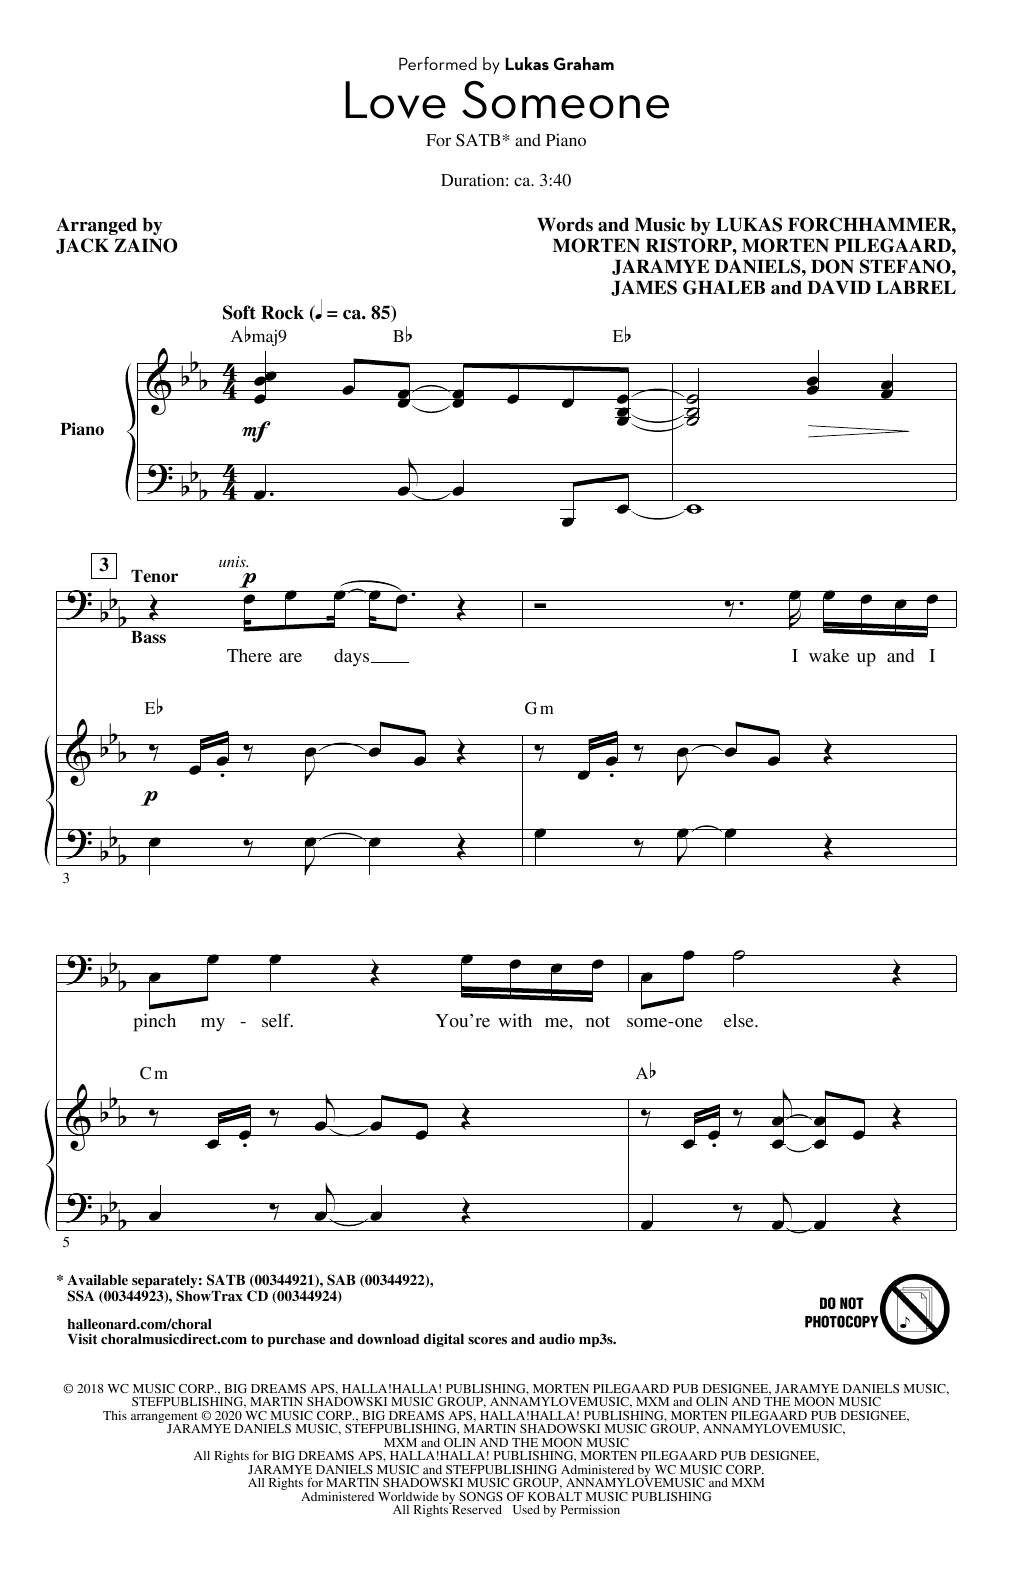 Lukas Graham Love Someone (arr. Jack Zaino) Sheet Music Notes & Chords for SATB Choir - Download or Print PDF